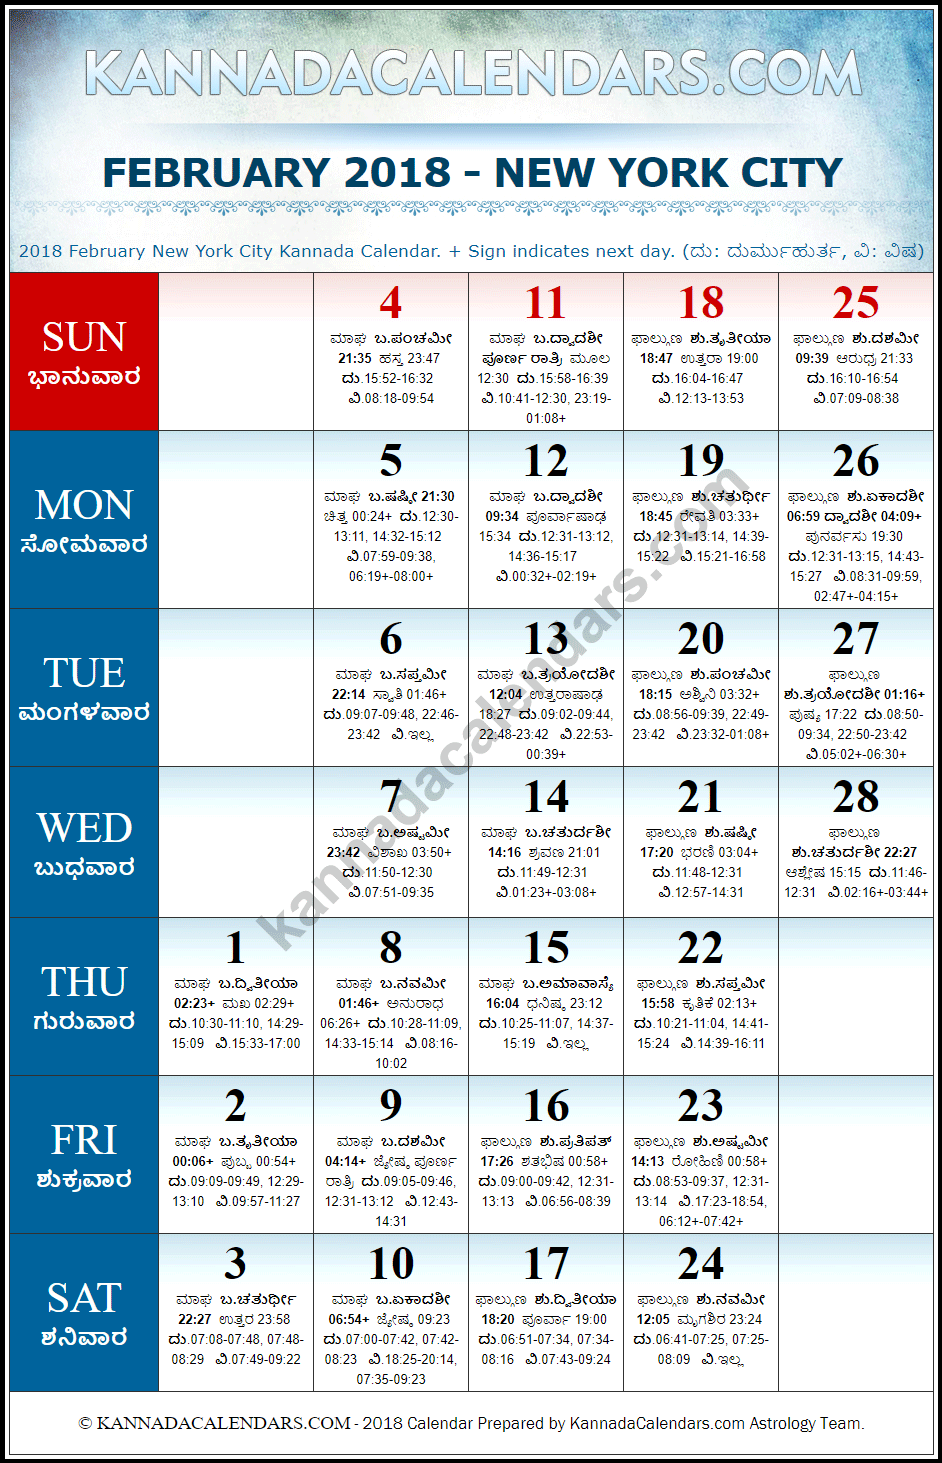 February 2018 Kannada Calendar for New York, USA